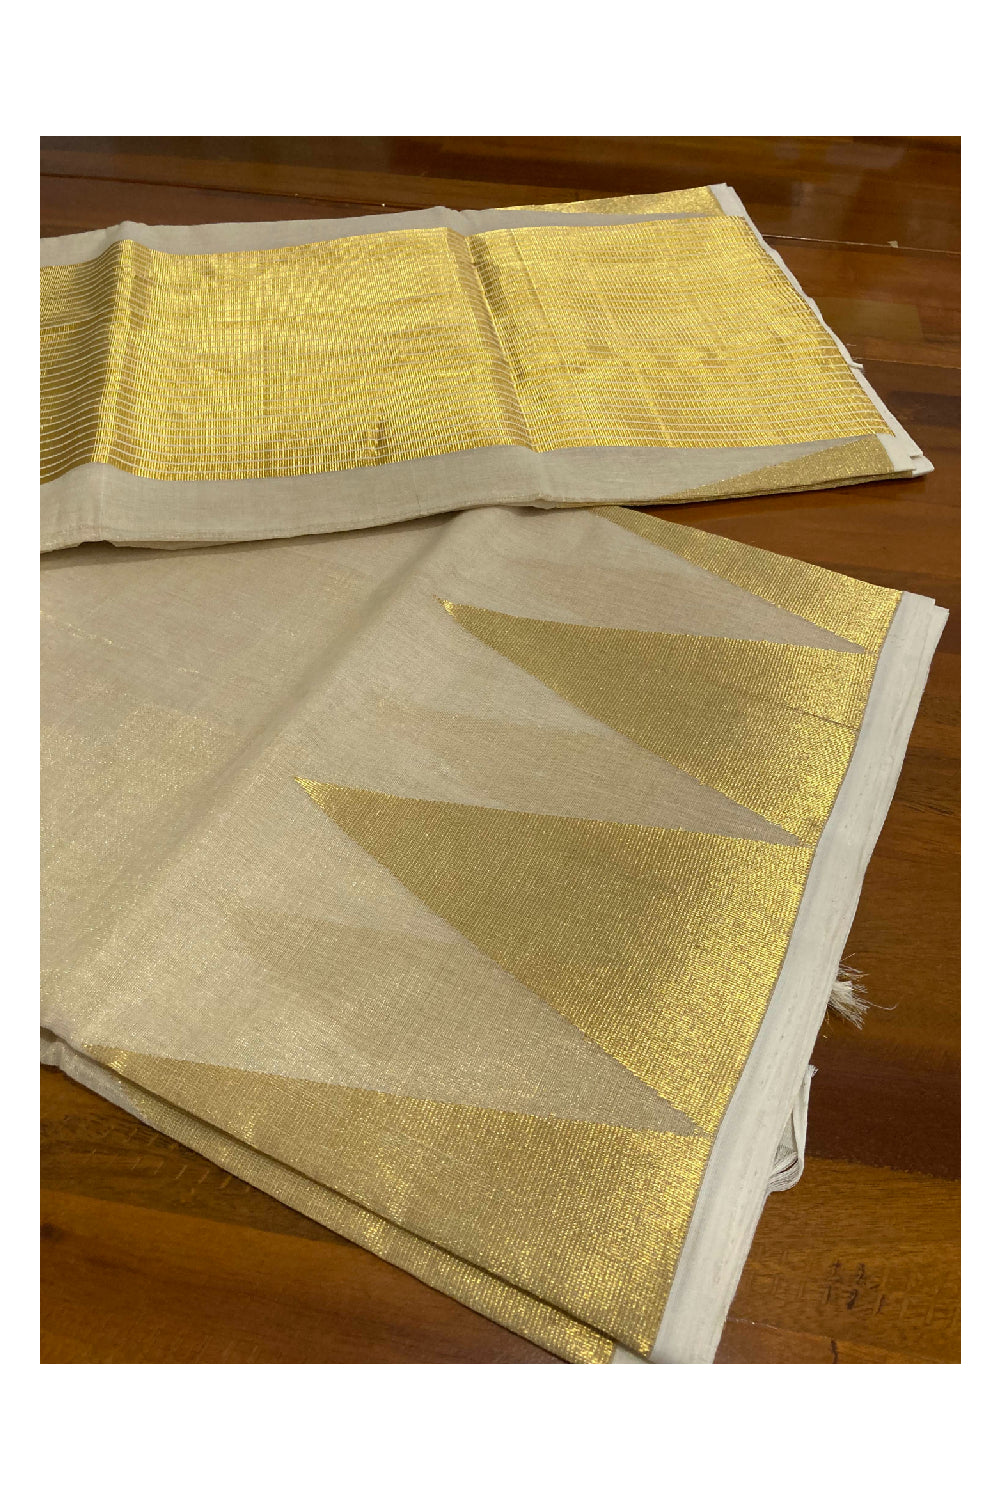 Southloom™ Original Handloom Kasavu Tissue Saree with Unique Temple Design Border